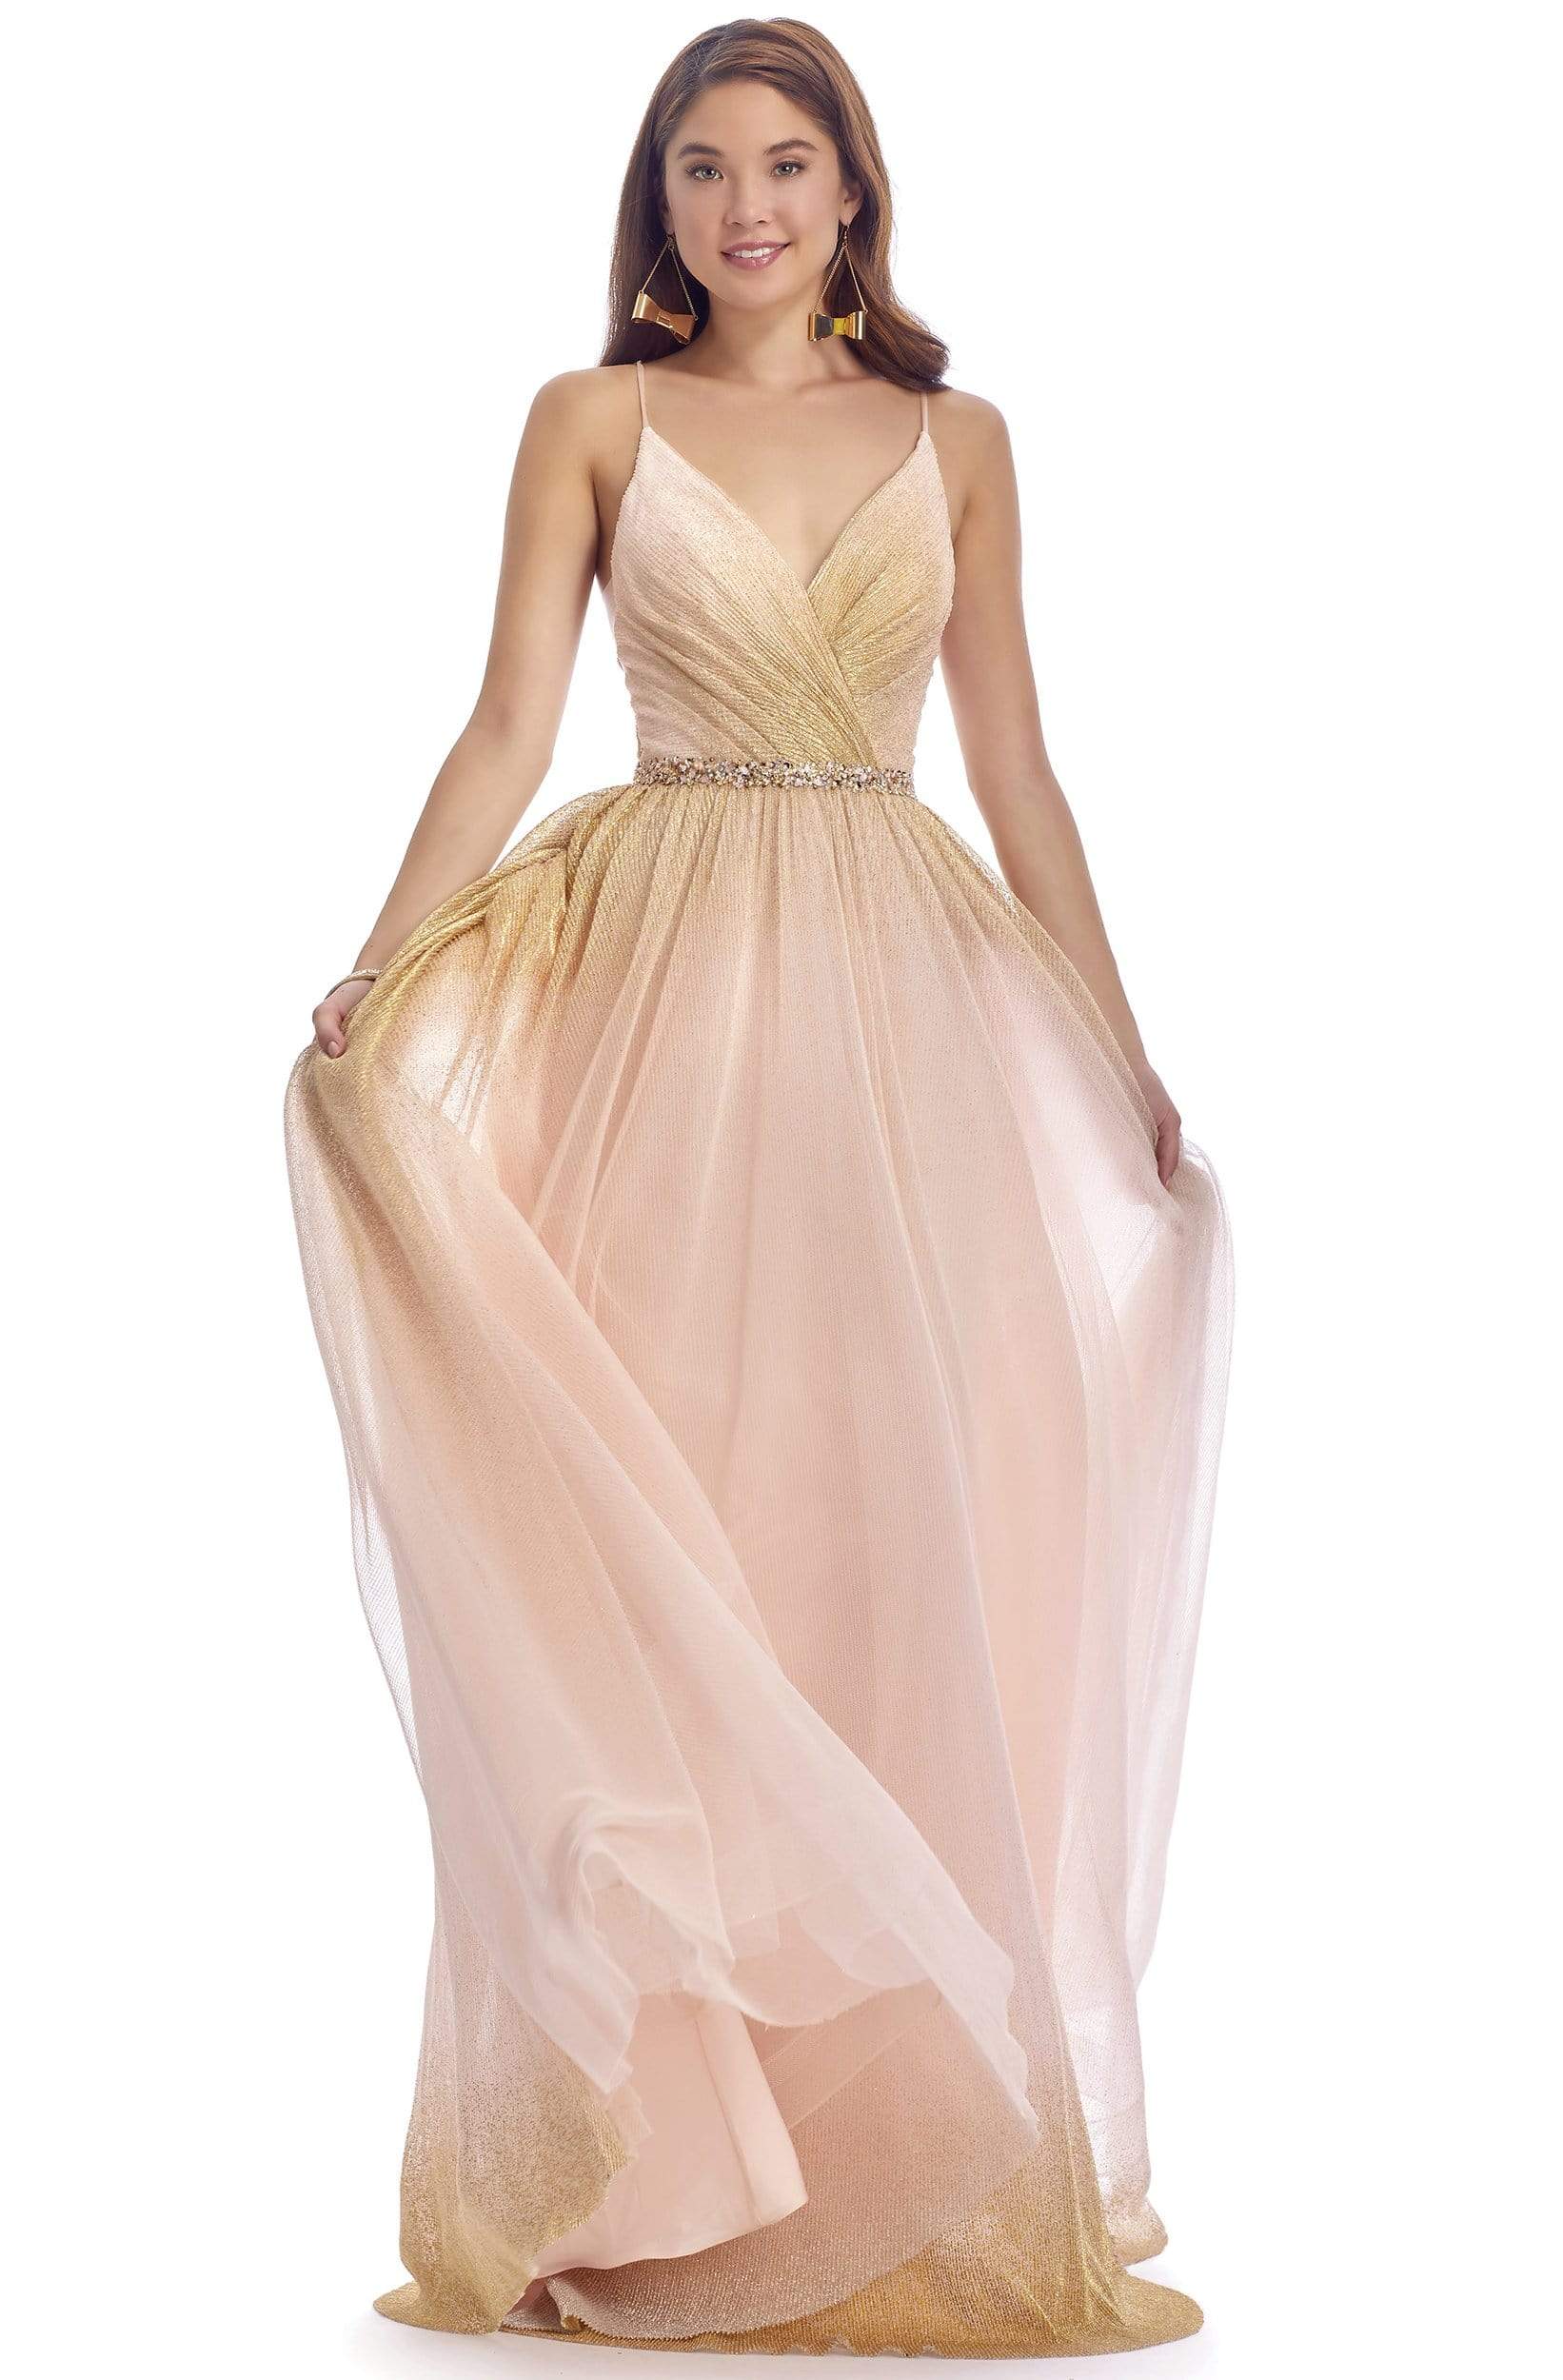 Clarisse - 8121 Sweetheart Bejeweled Waist A-Line Dress
